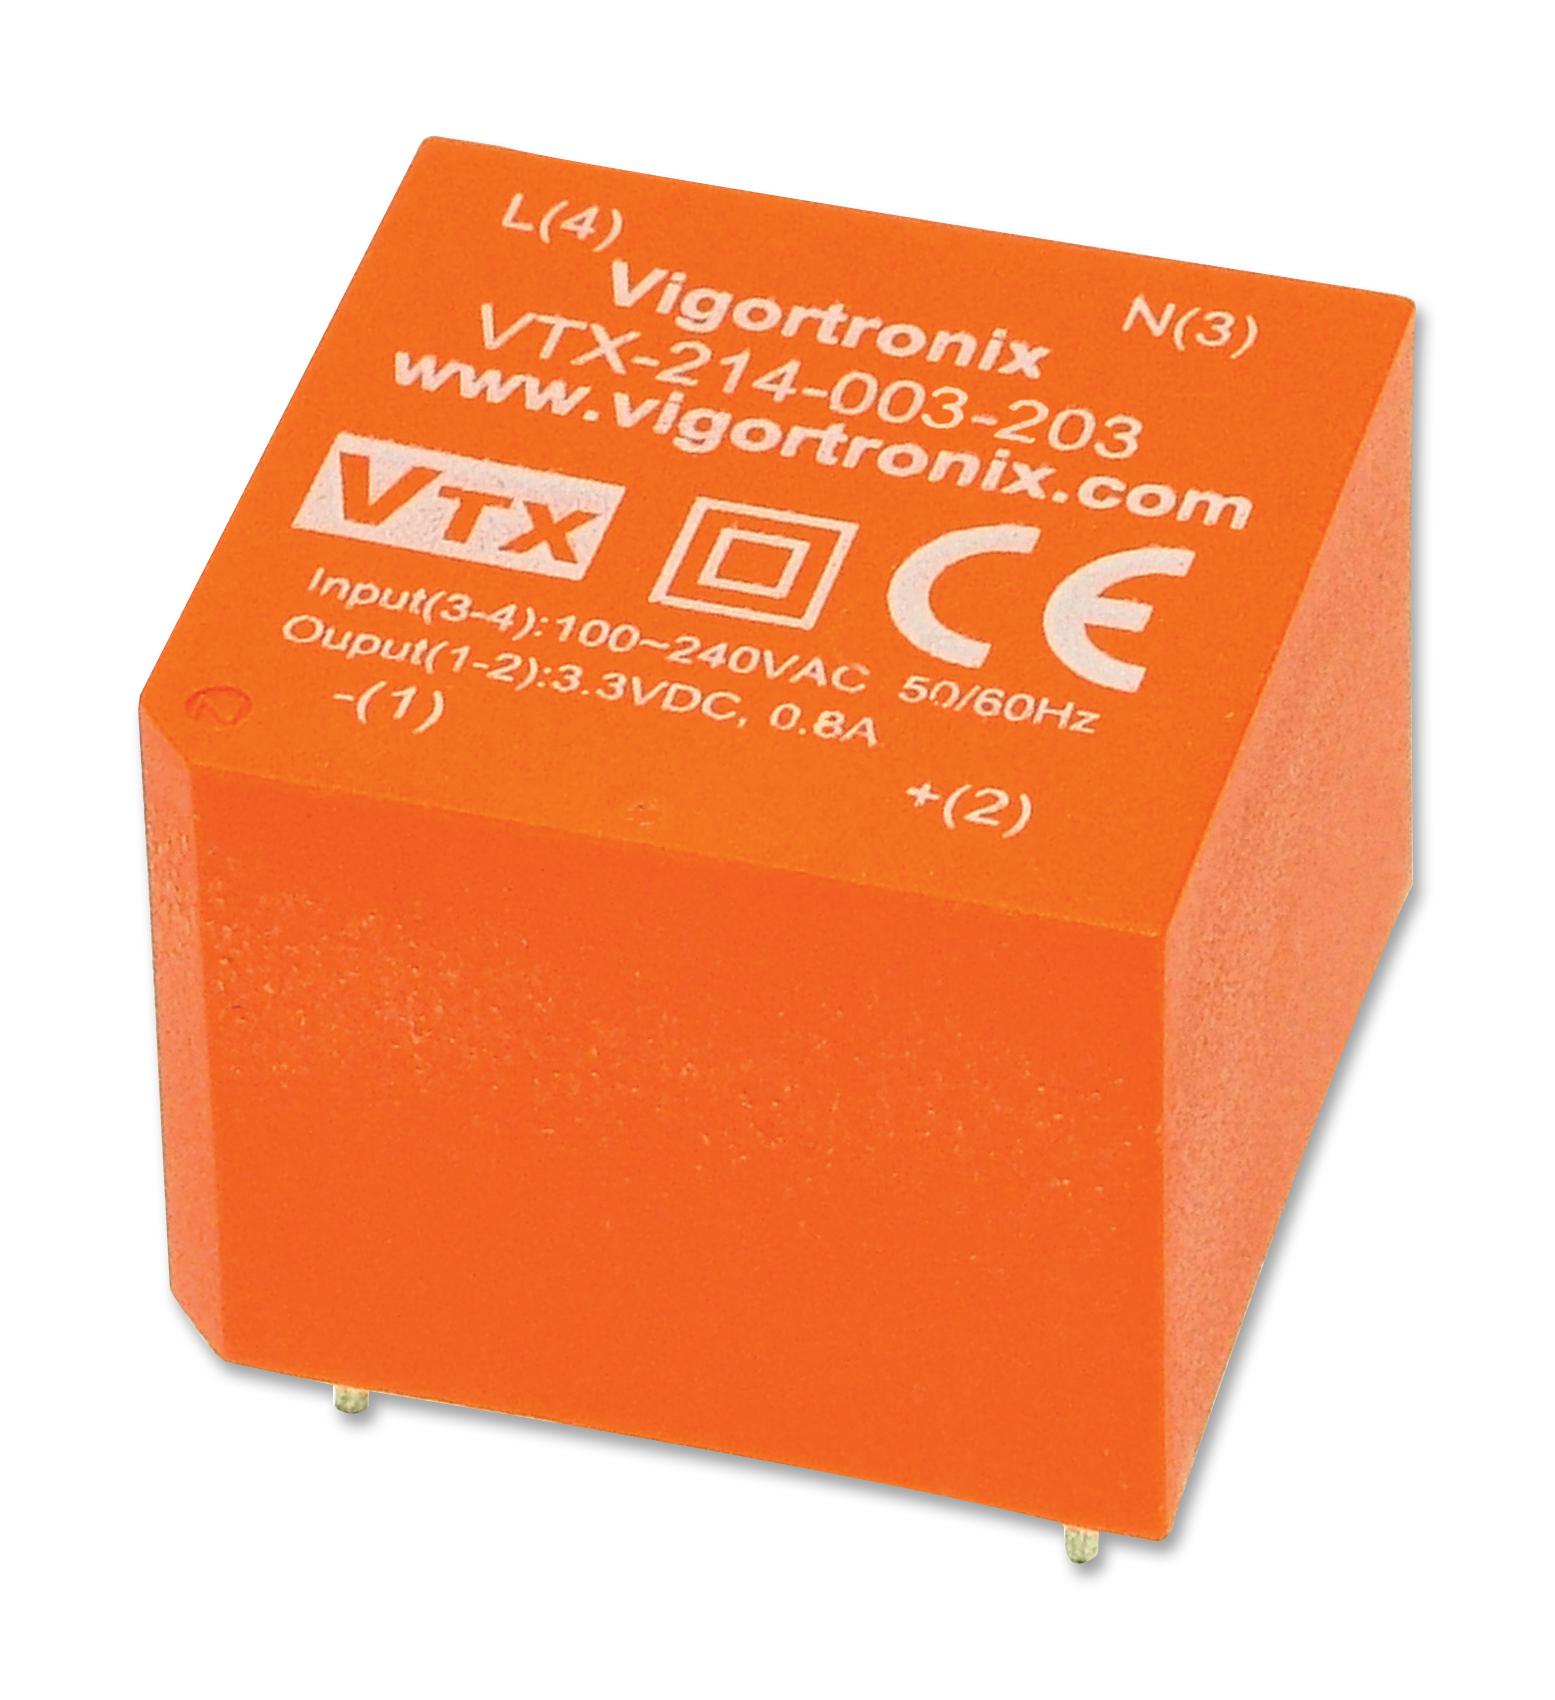 VIGORTRONIX PCB Mount - Single Ouput VTX-214-003-206 POWER SUPPLY, AC-DC, 6V, 0.5A VIGORTRONIX 2464657 VTX-214-003-206